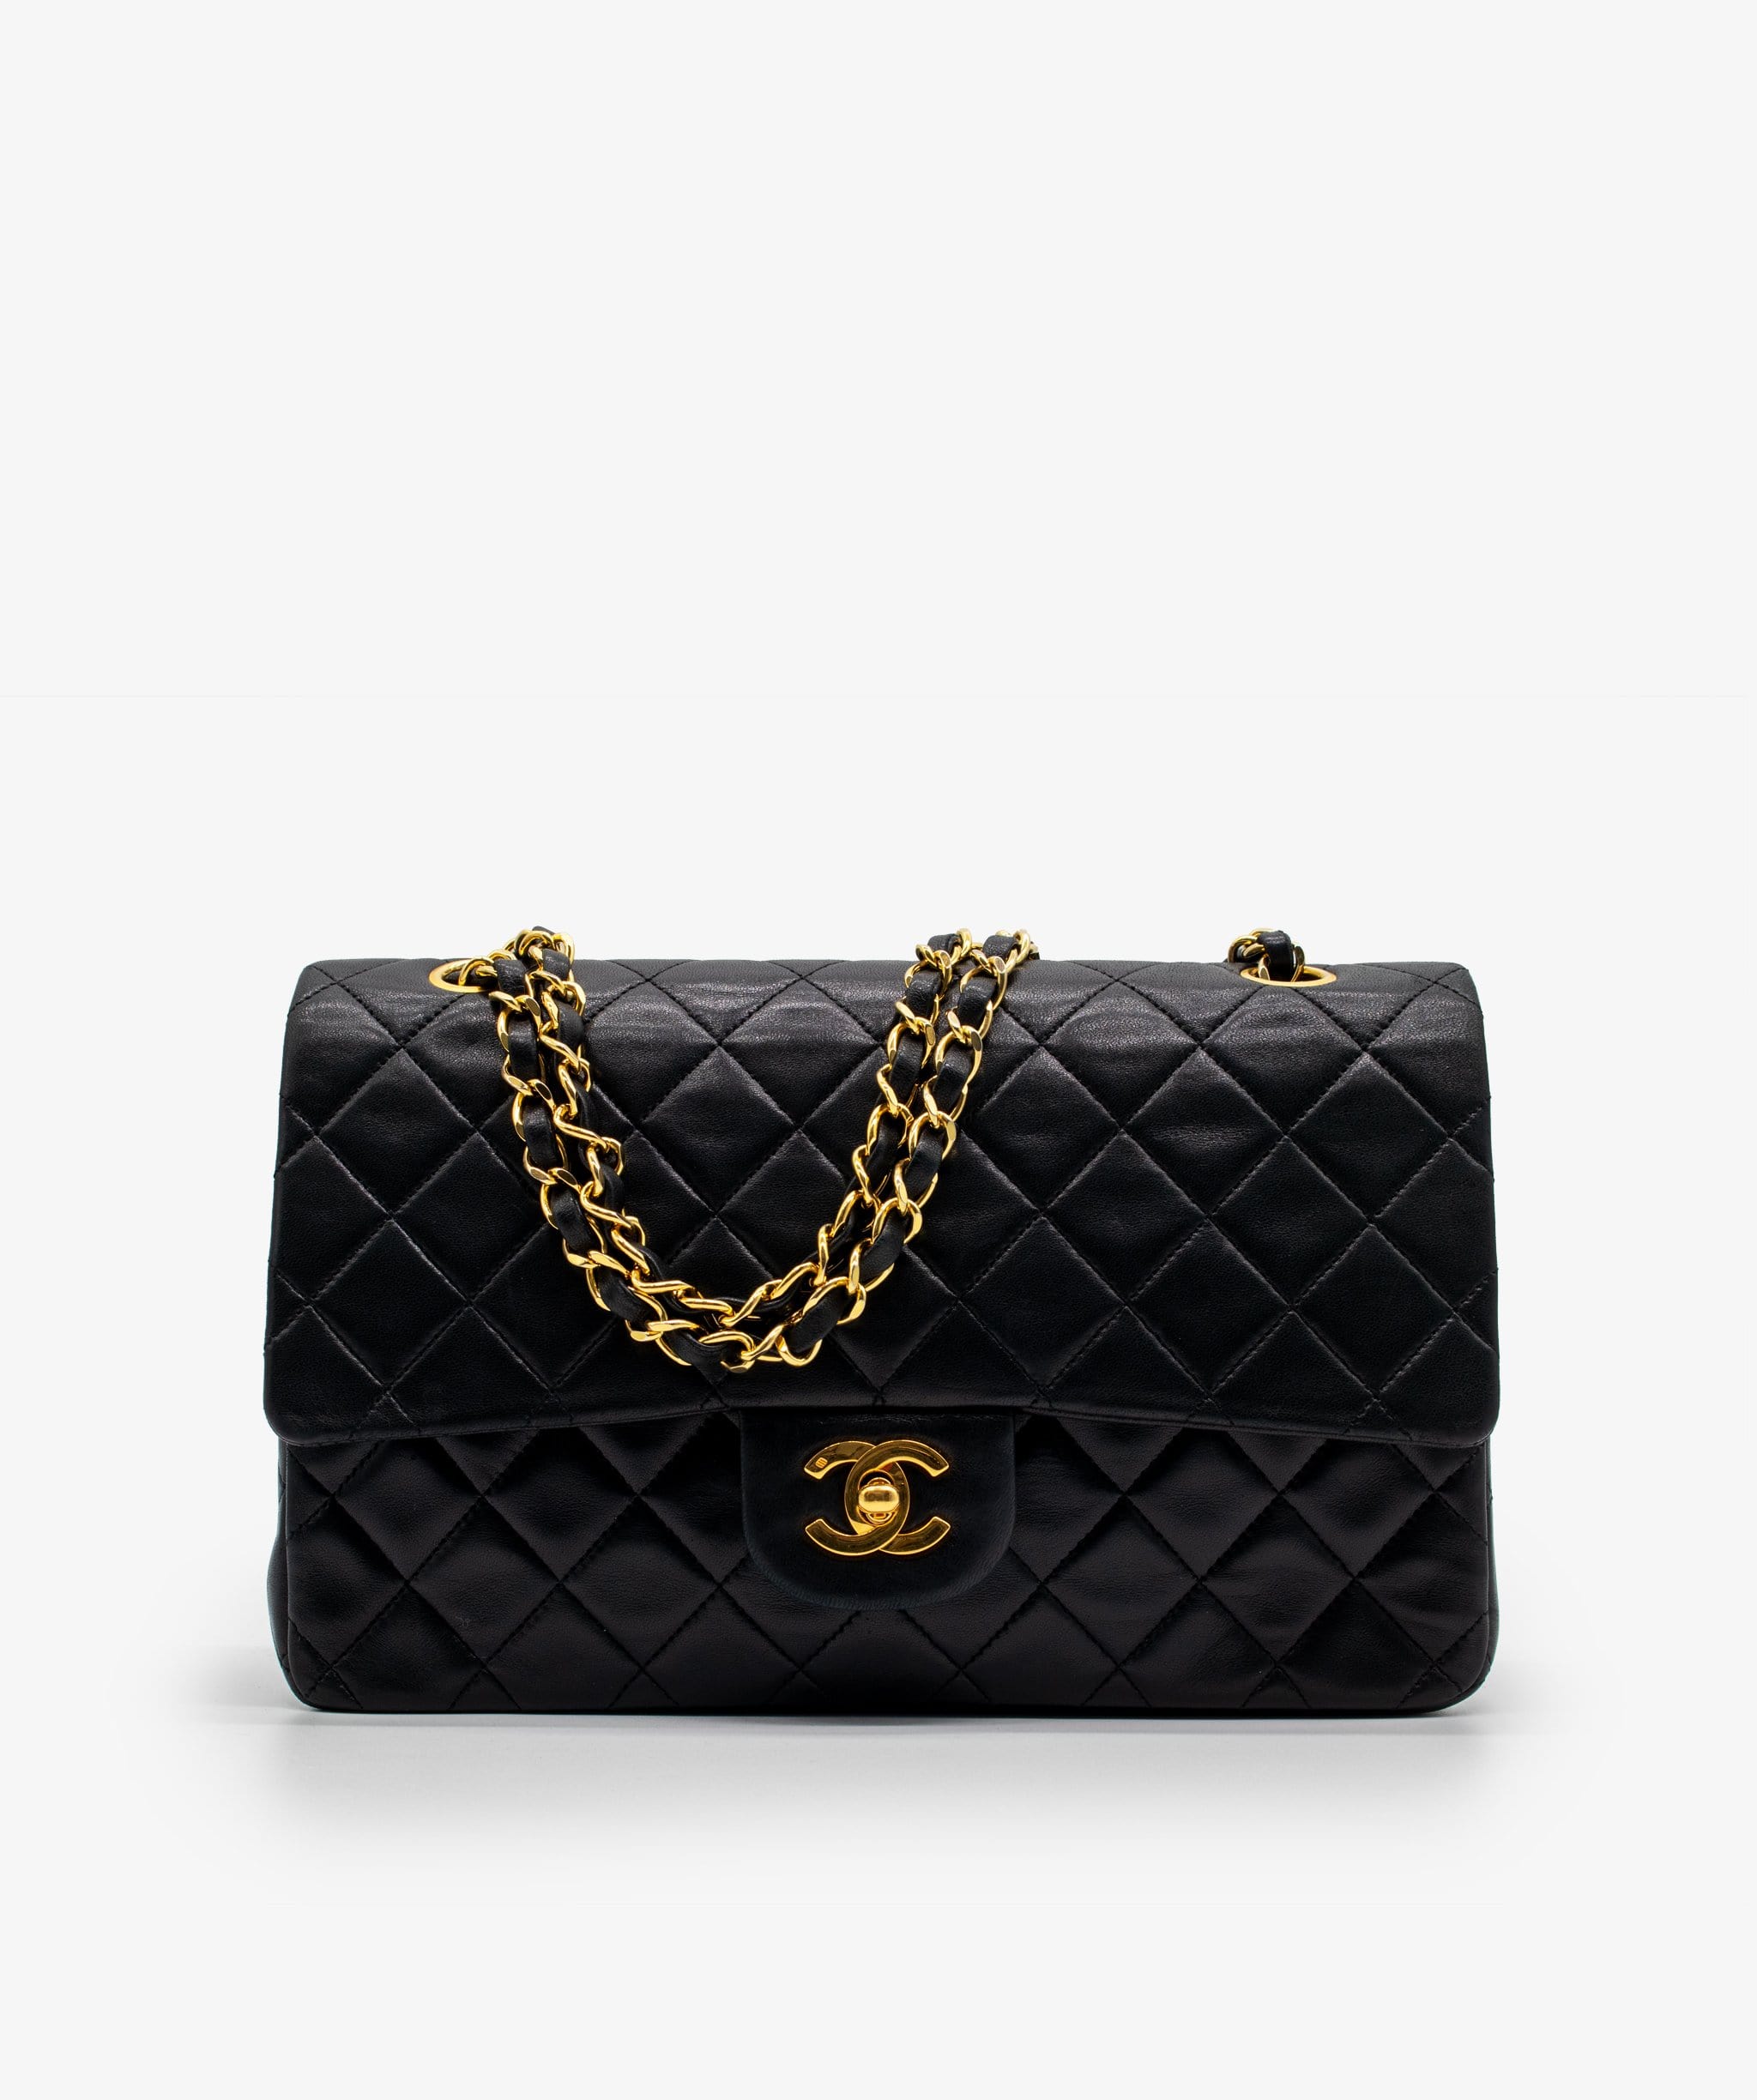 Chanel Chanel Chain Flap Bag RCL1006